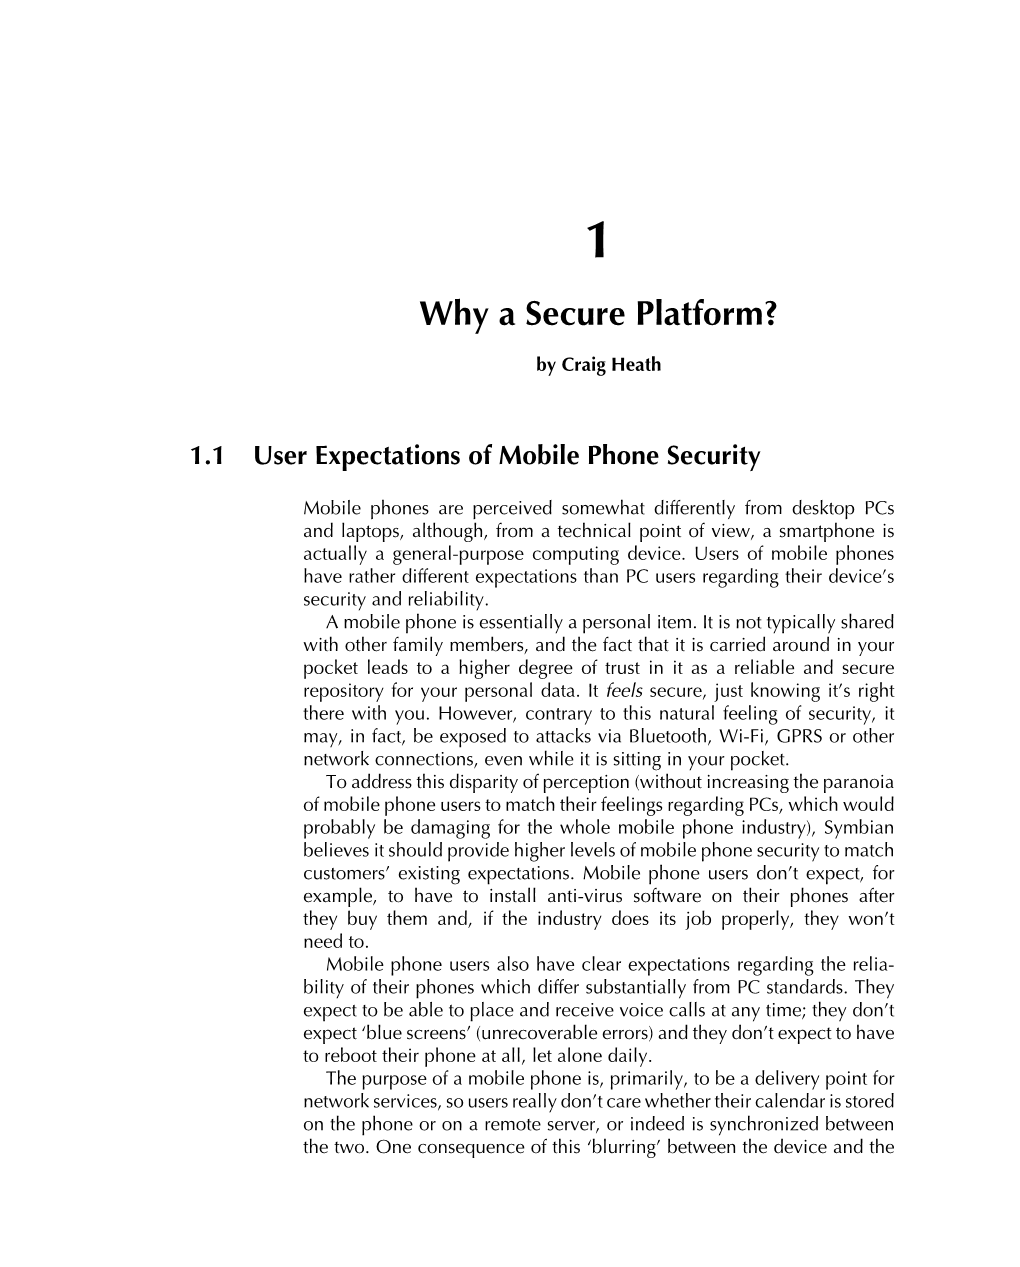 Why a Secure Platform?